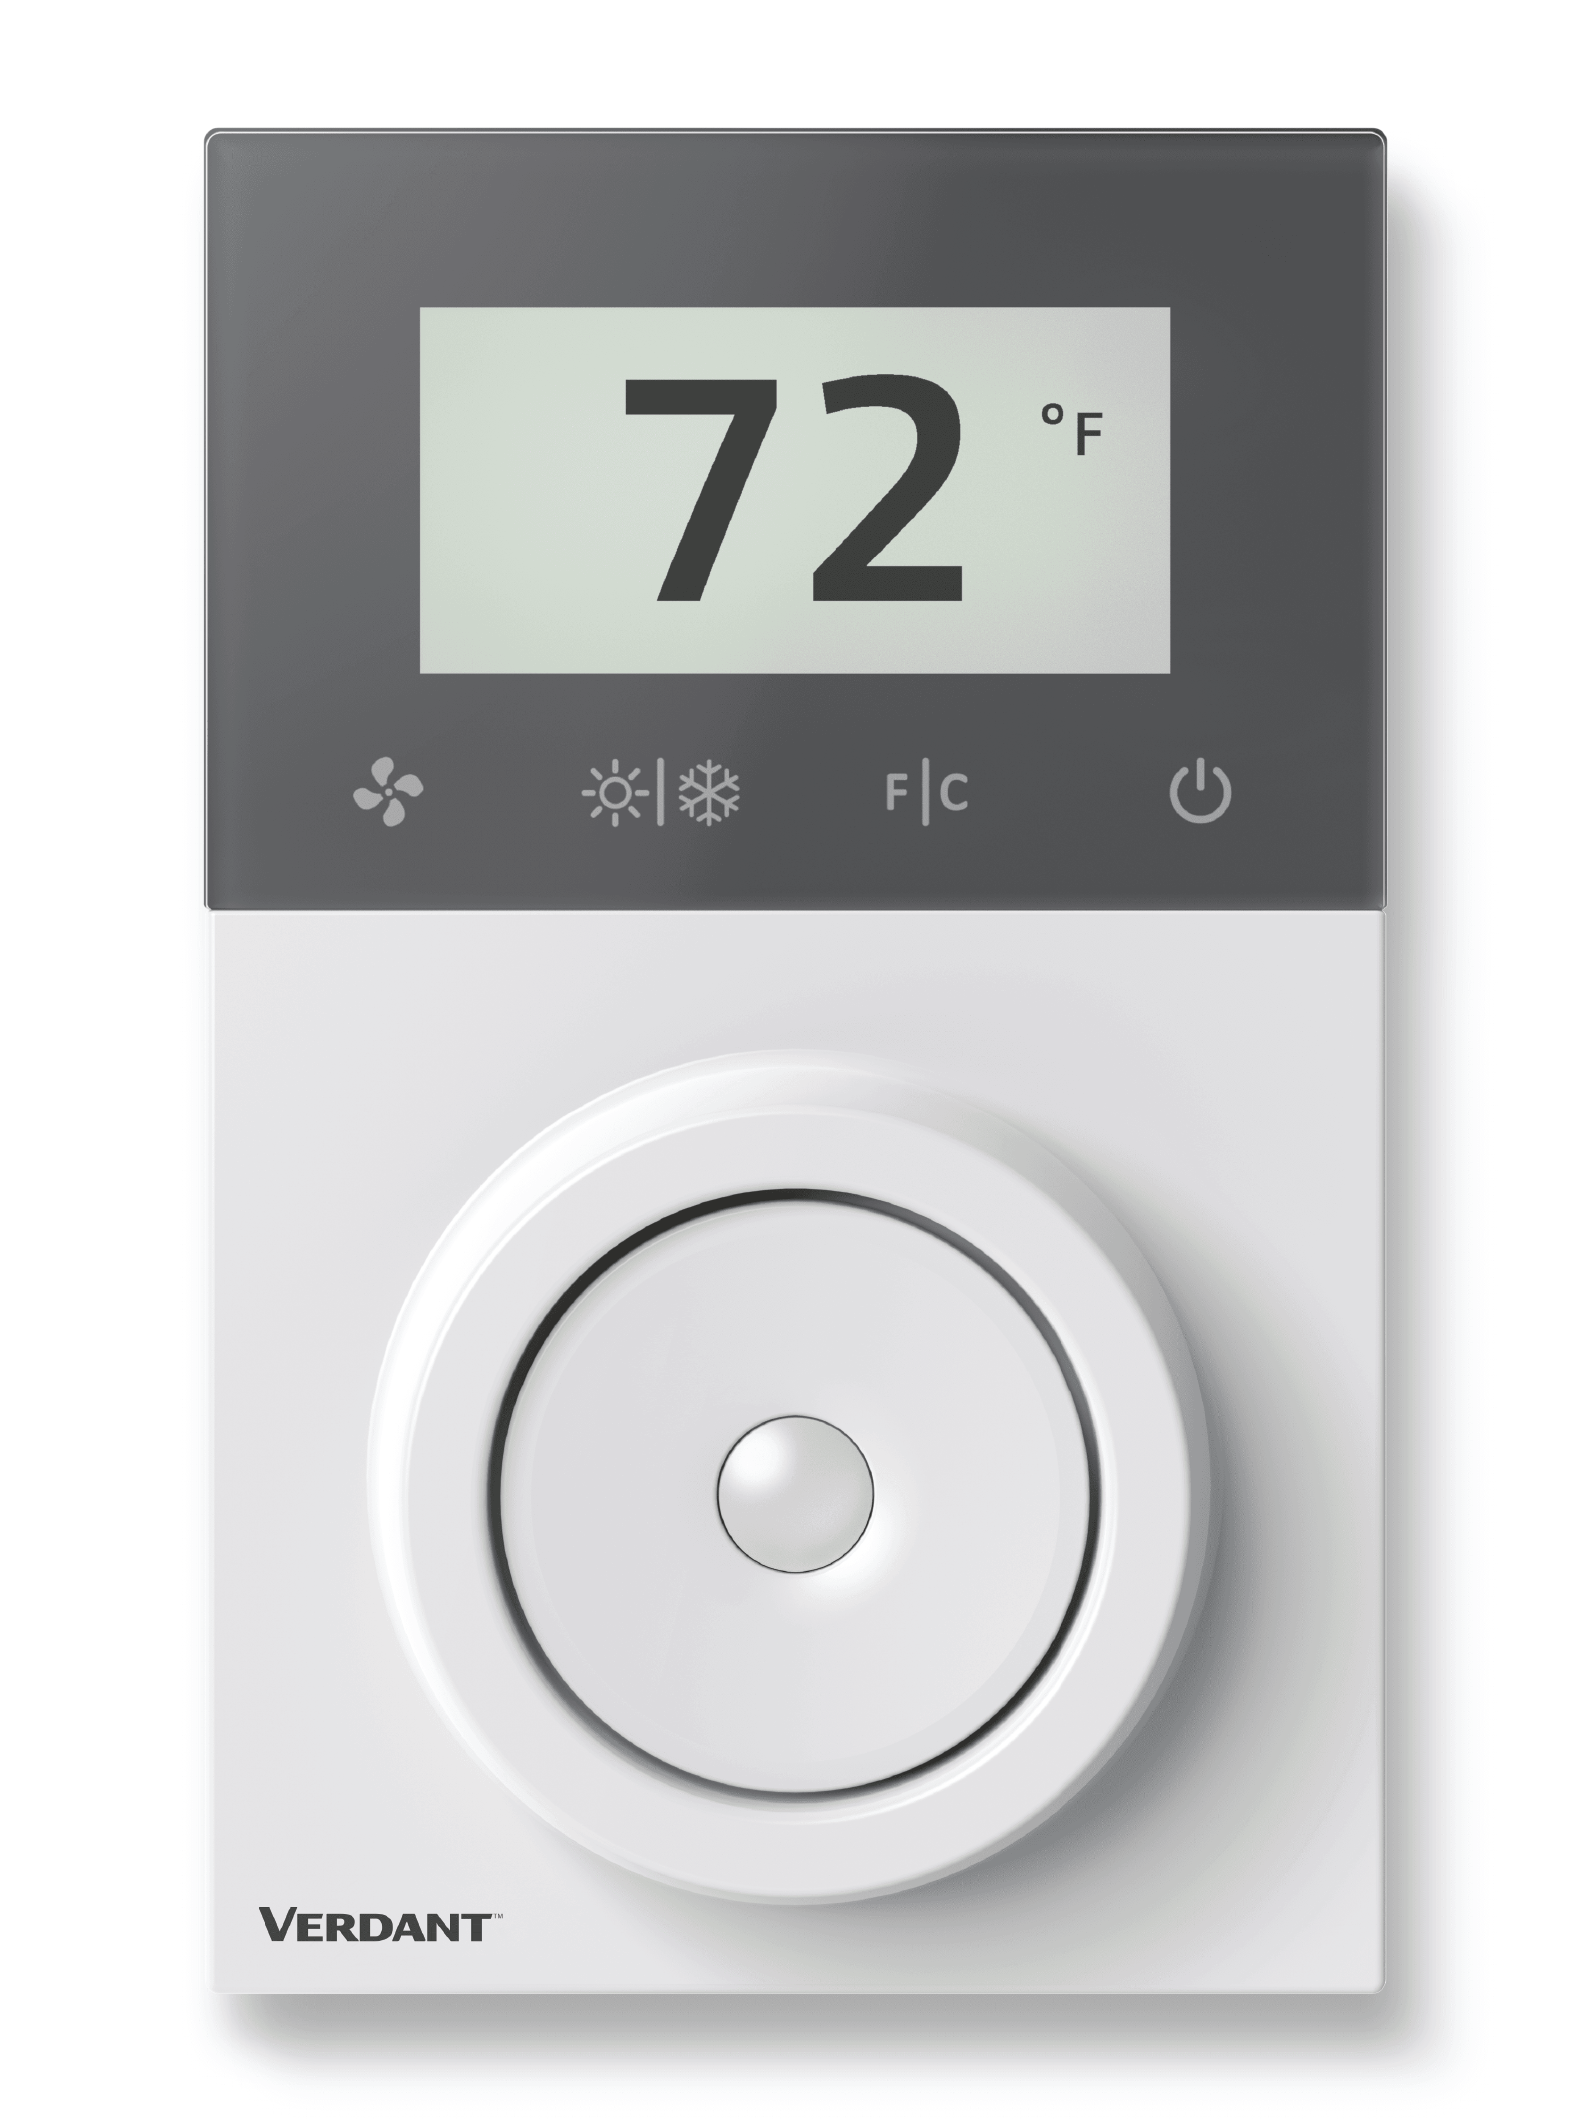 Illustration of a Verdant VX thermostat